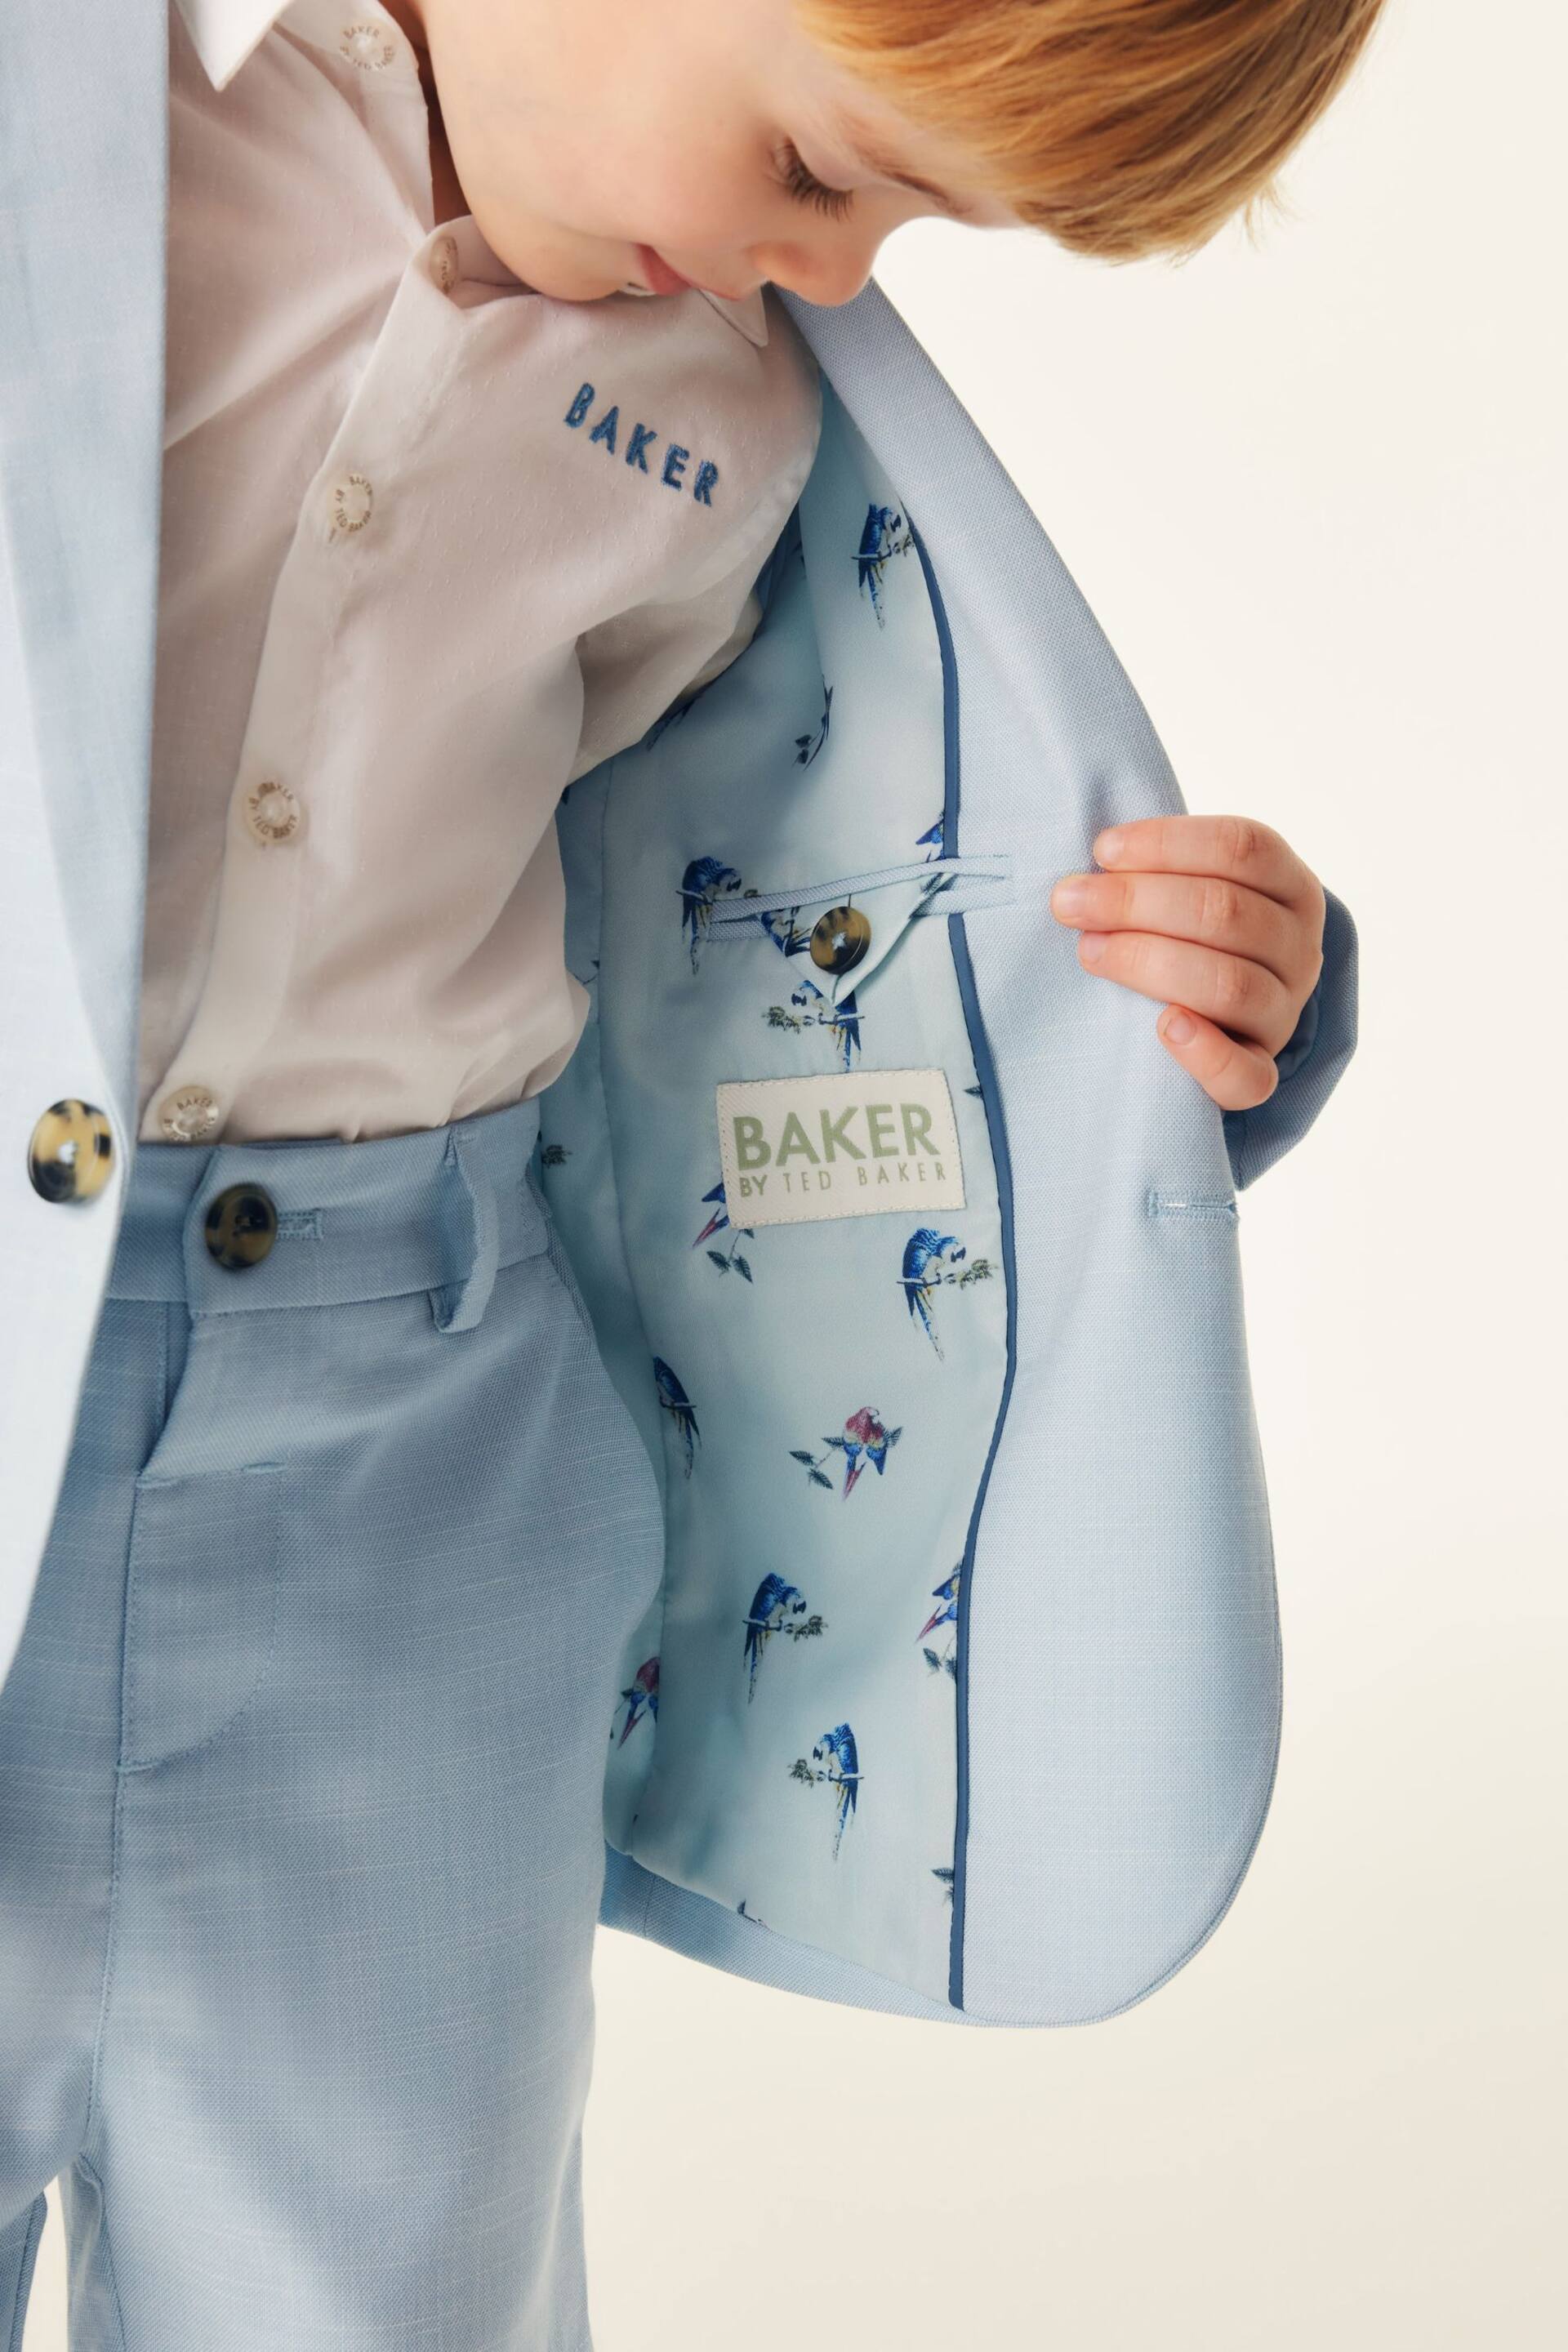 Baker by Ted Baker Blue Suit Jacket, Shirt and Short Set - Image 6 of 8